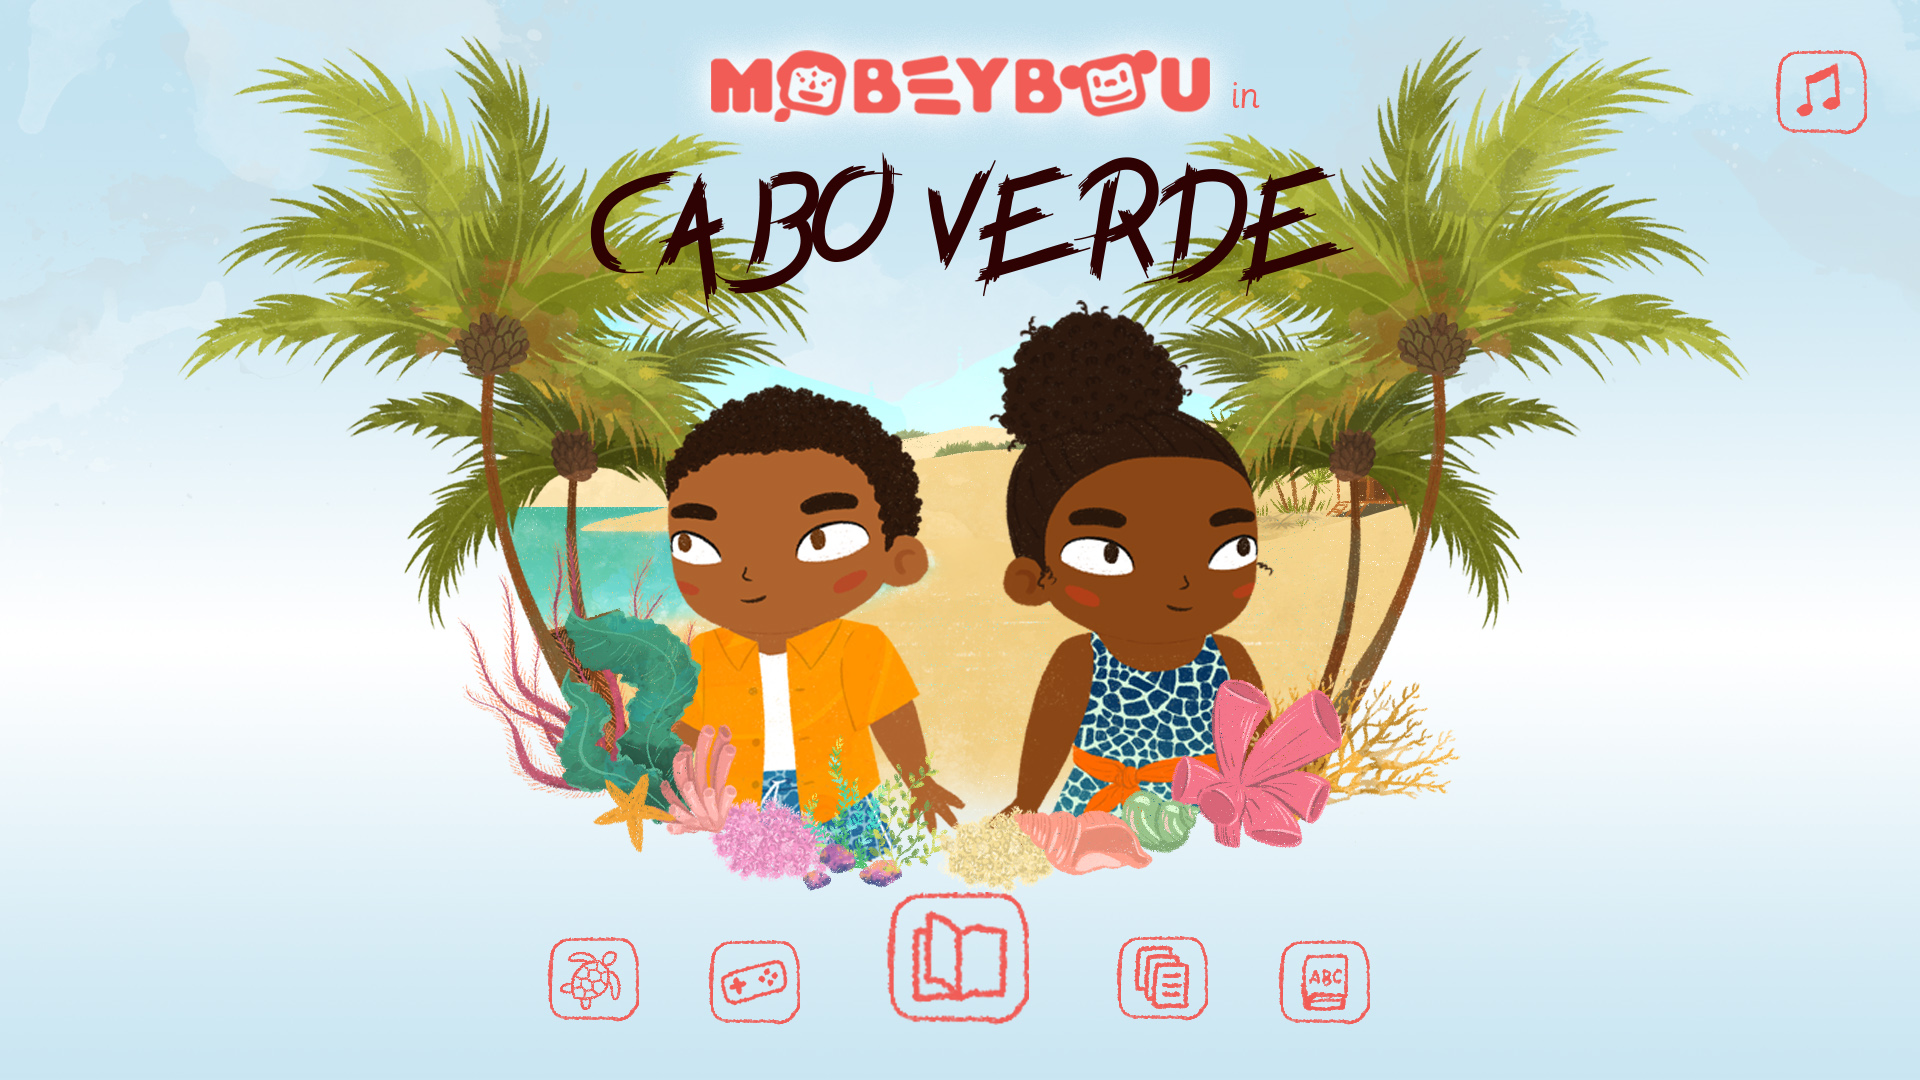 MobeyBou Cabo Verde